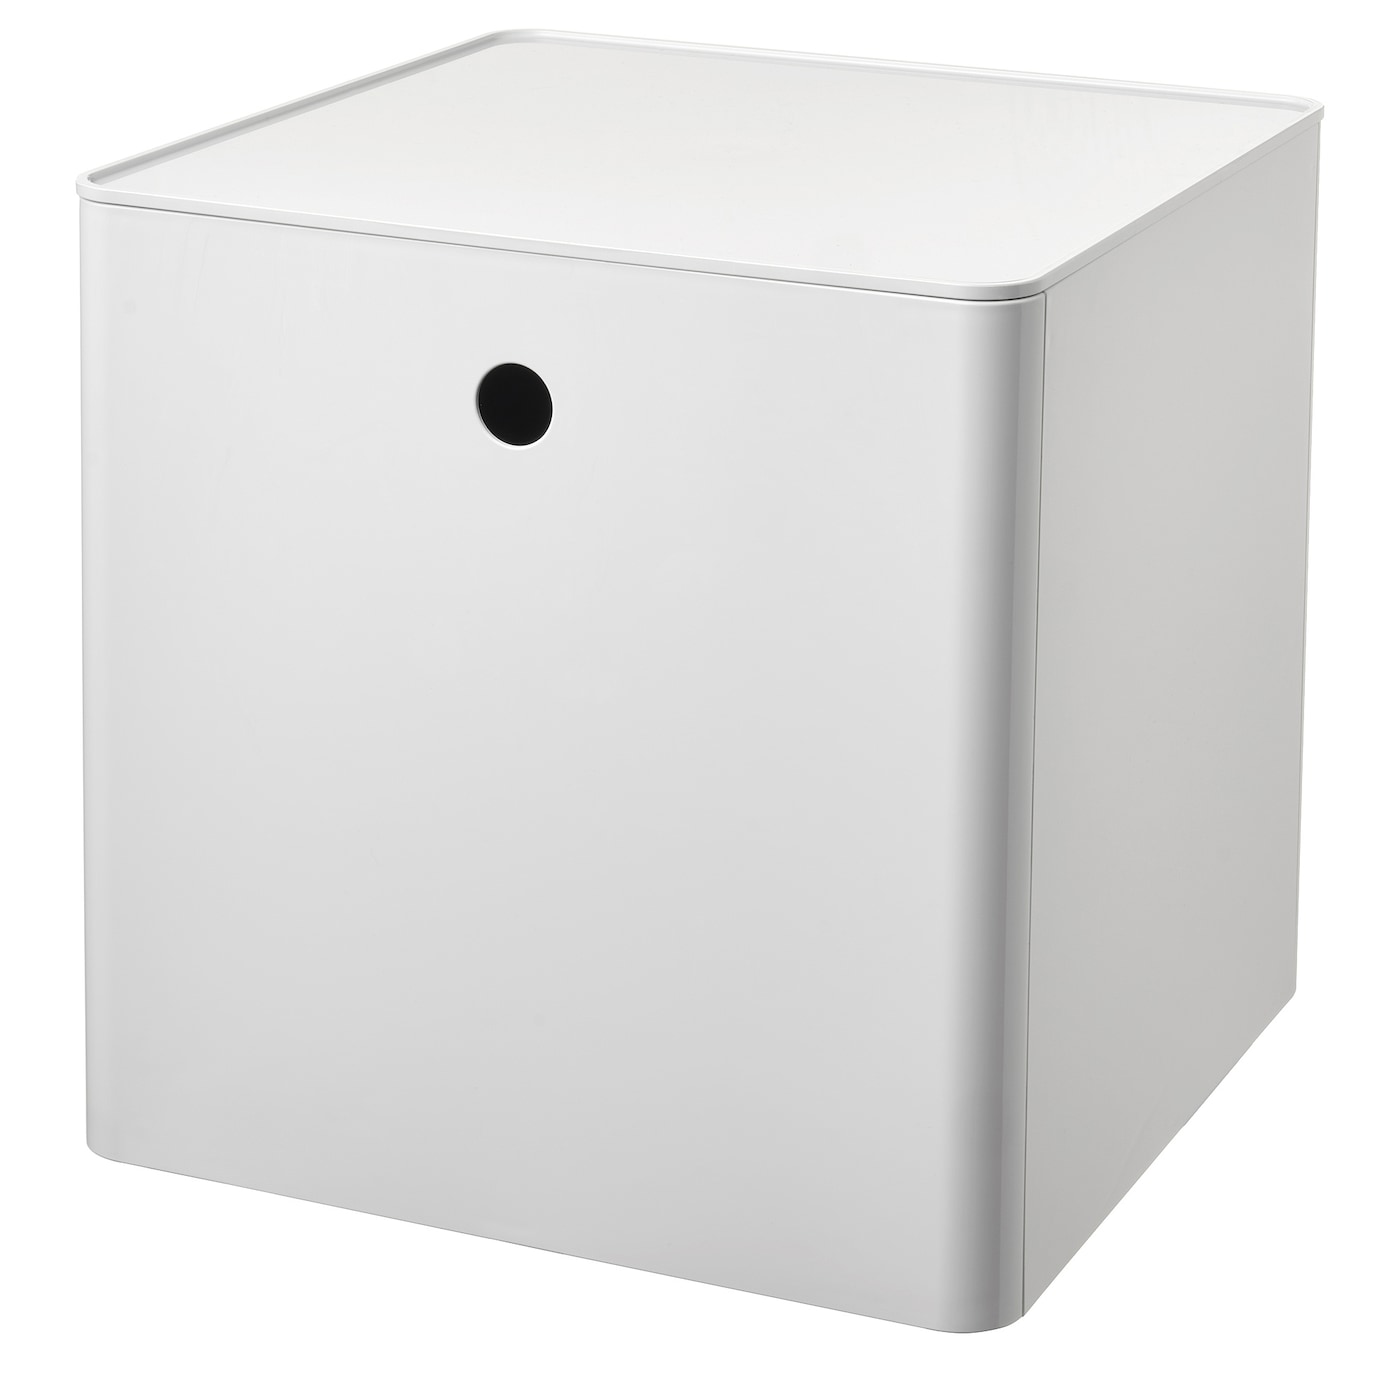 Органайзер - IKEA KUGGIS/ КУГГИС ИКЕА, 32x32x32 см, белый